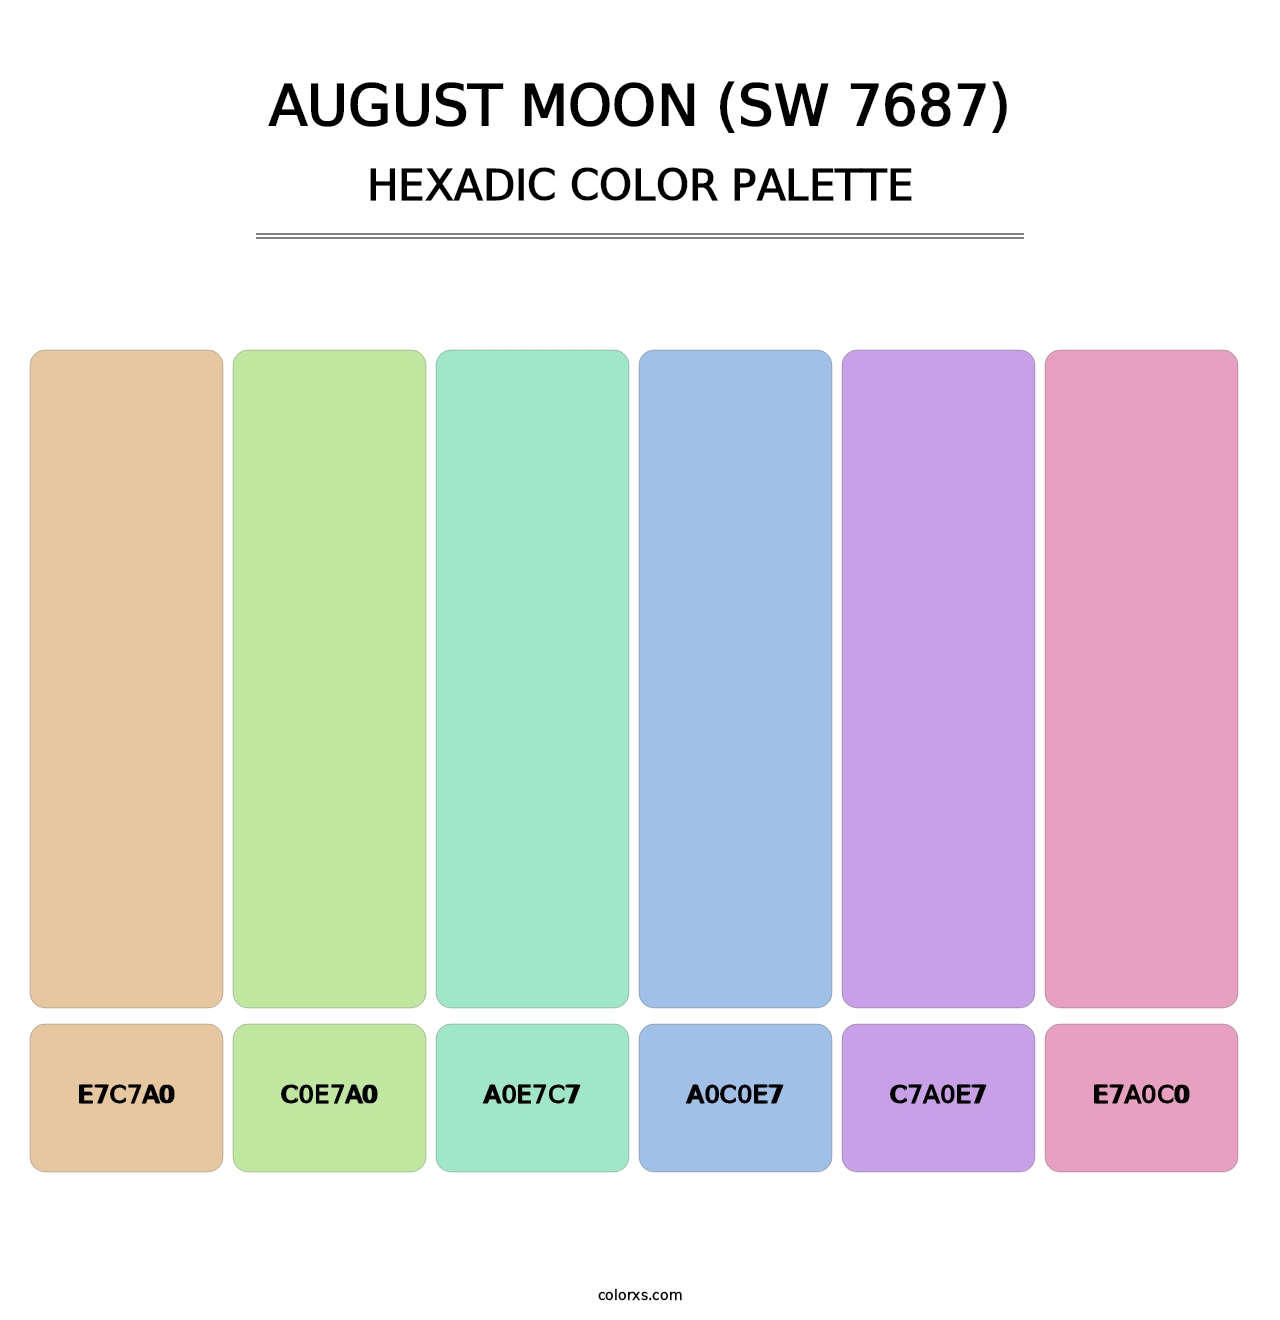 August Moon (SW 7687) - Hexadic Color Palette